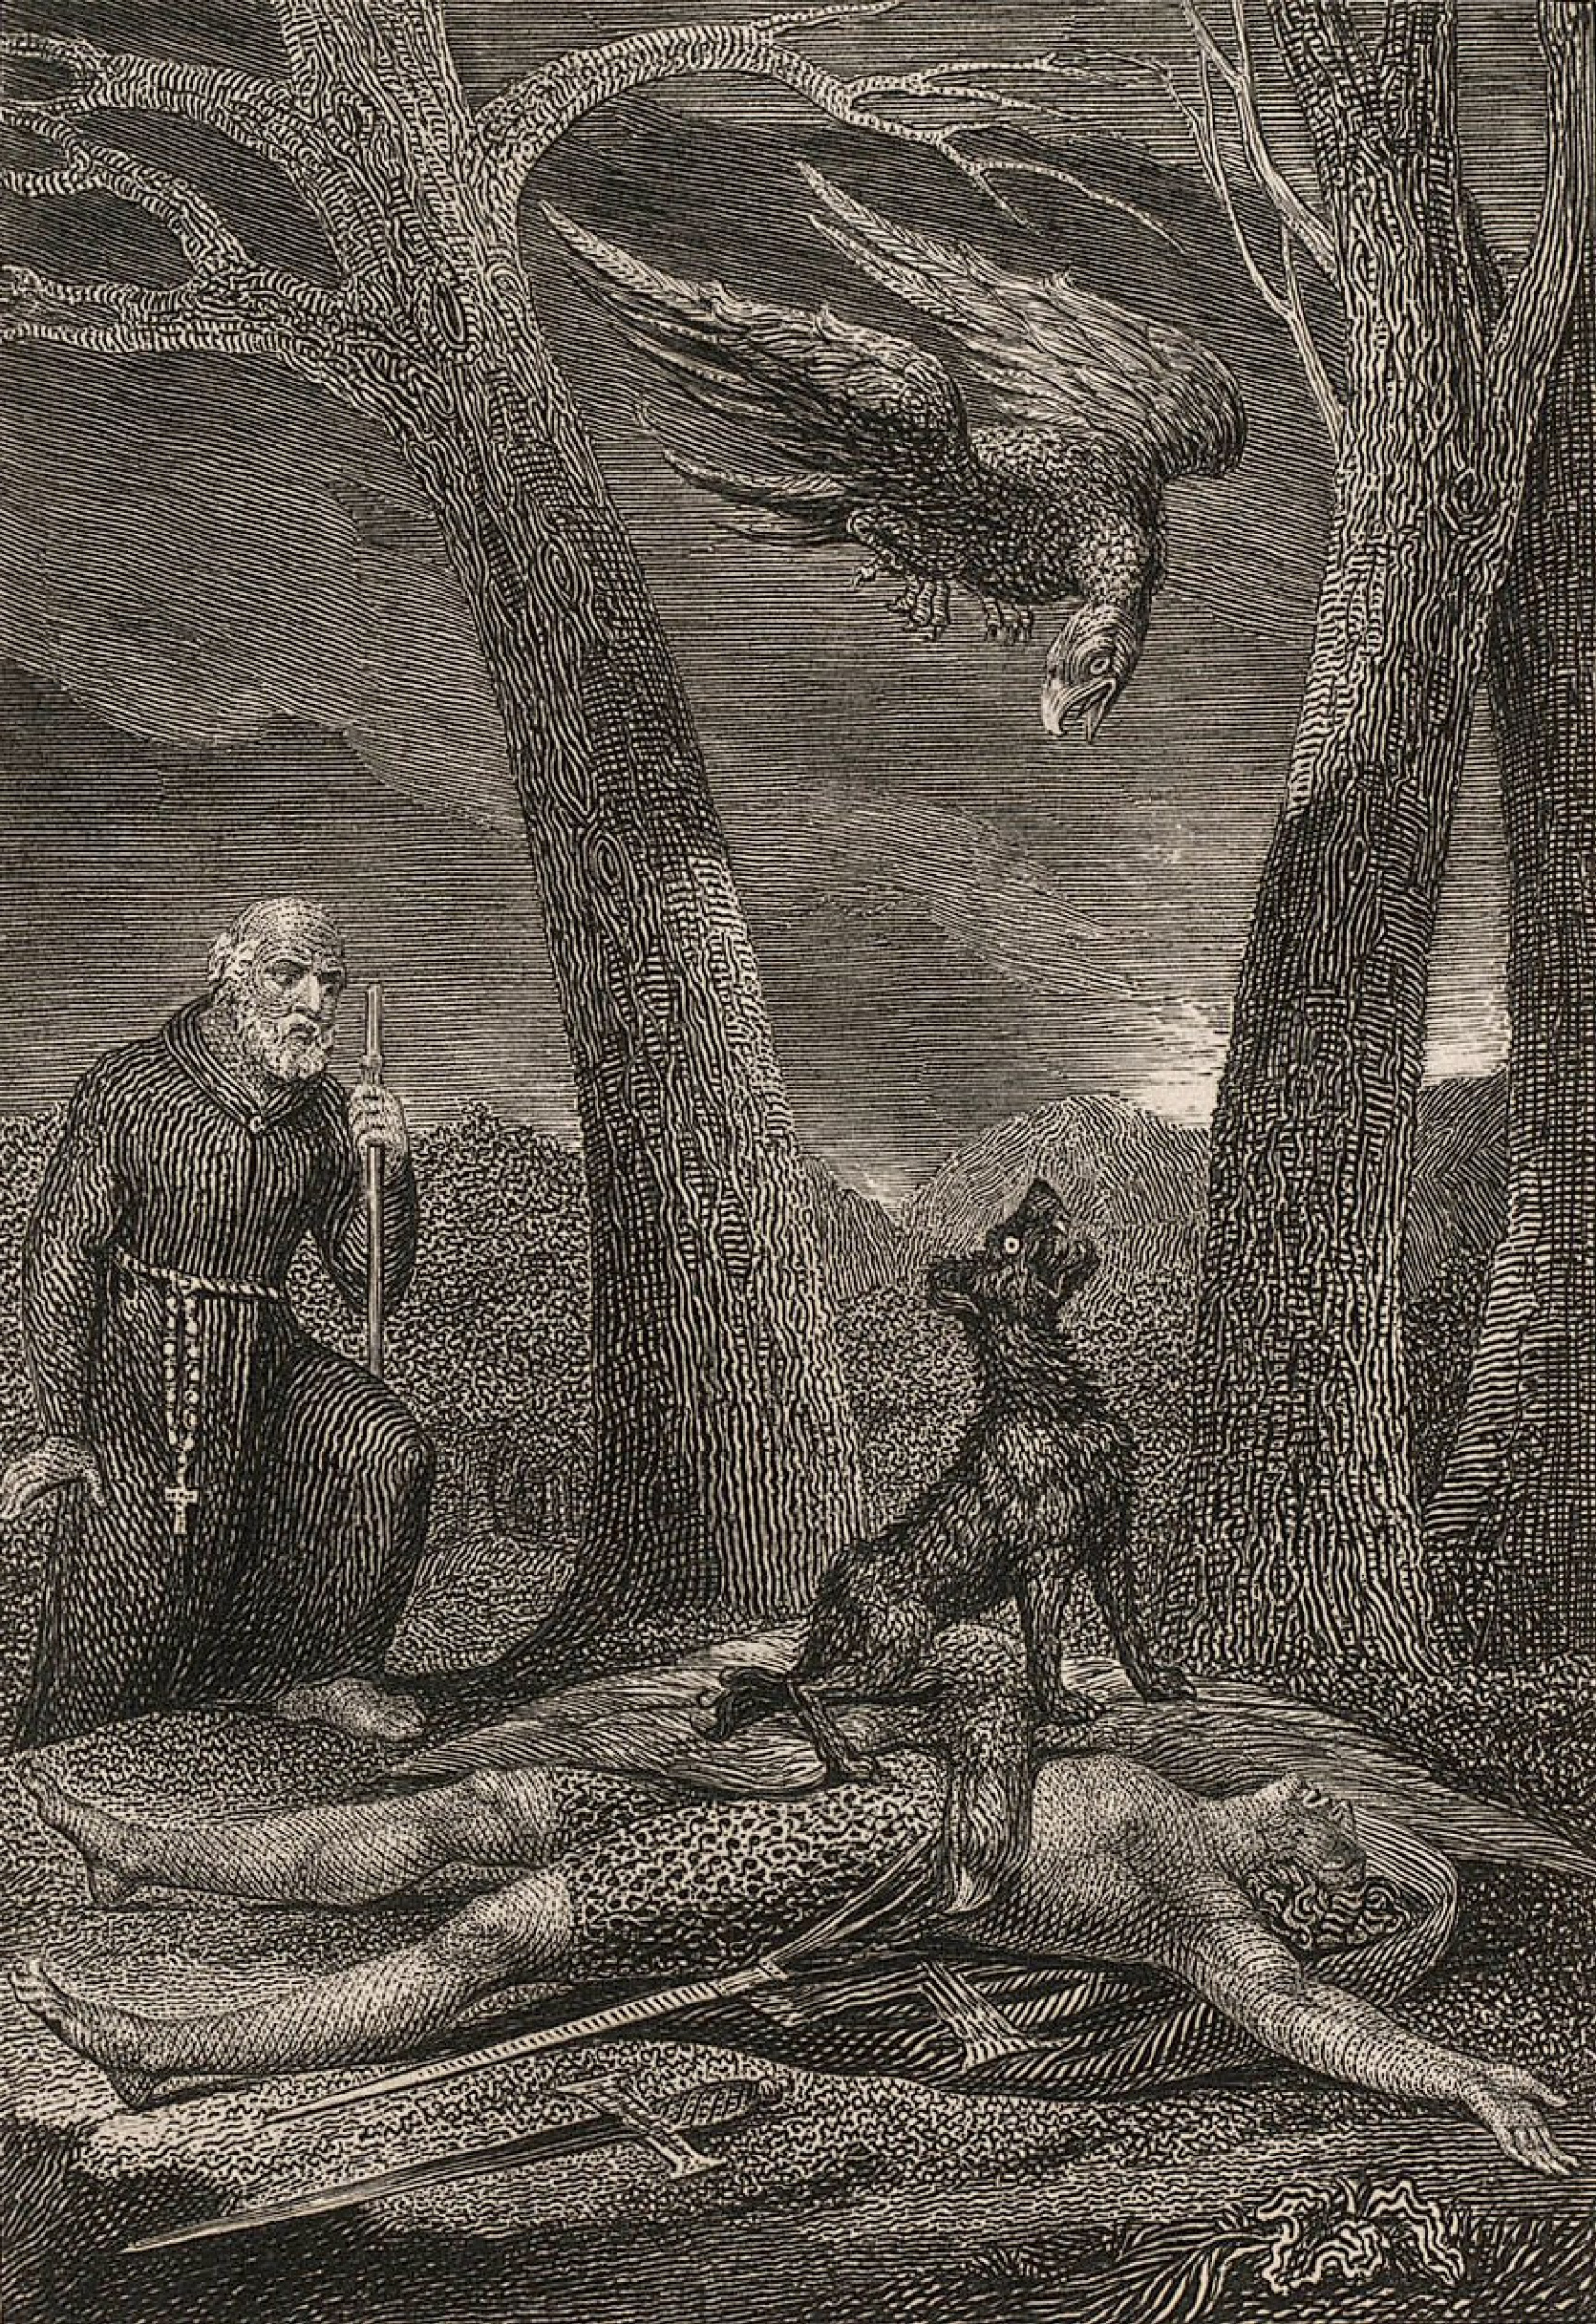 William Blake The dog hermit. Illustrations to William Hayley's 